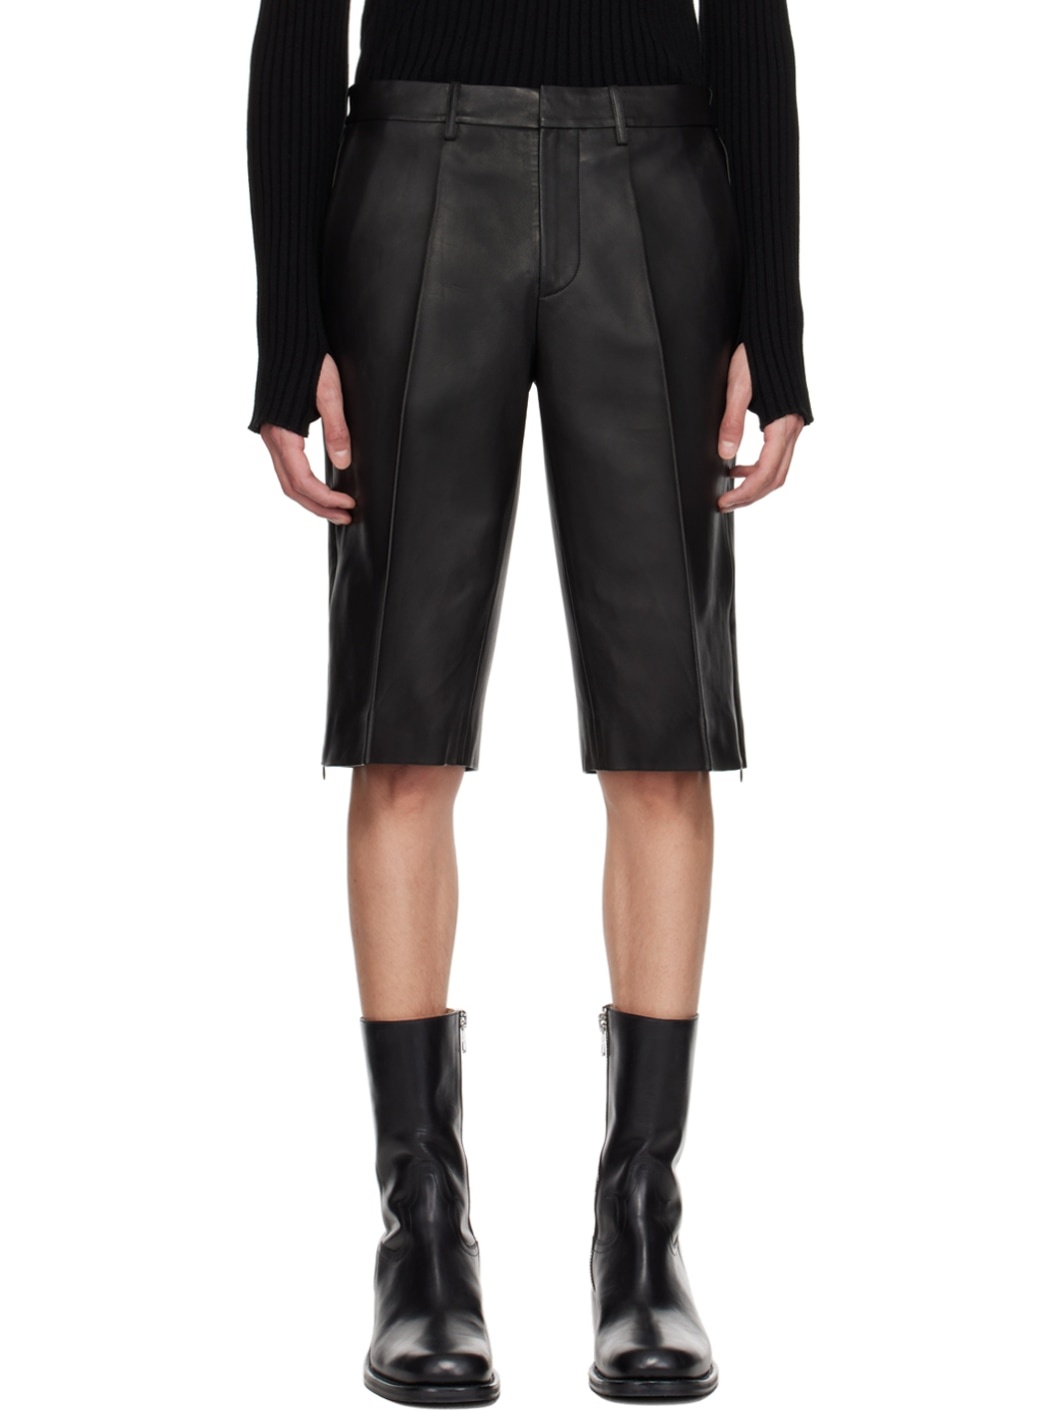 Black Creased Leather Shorts - 1